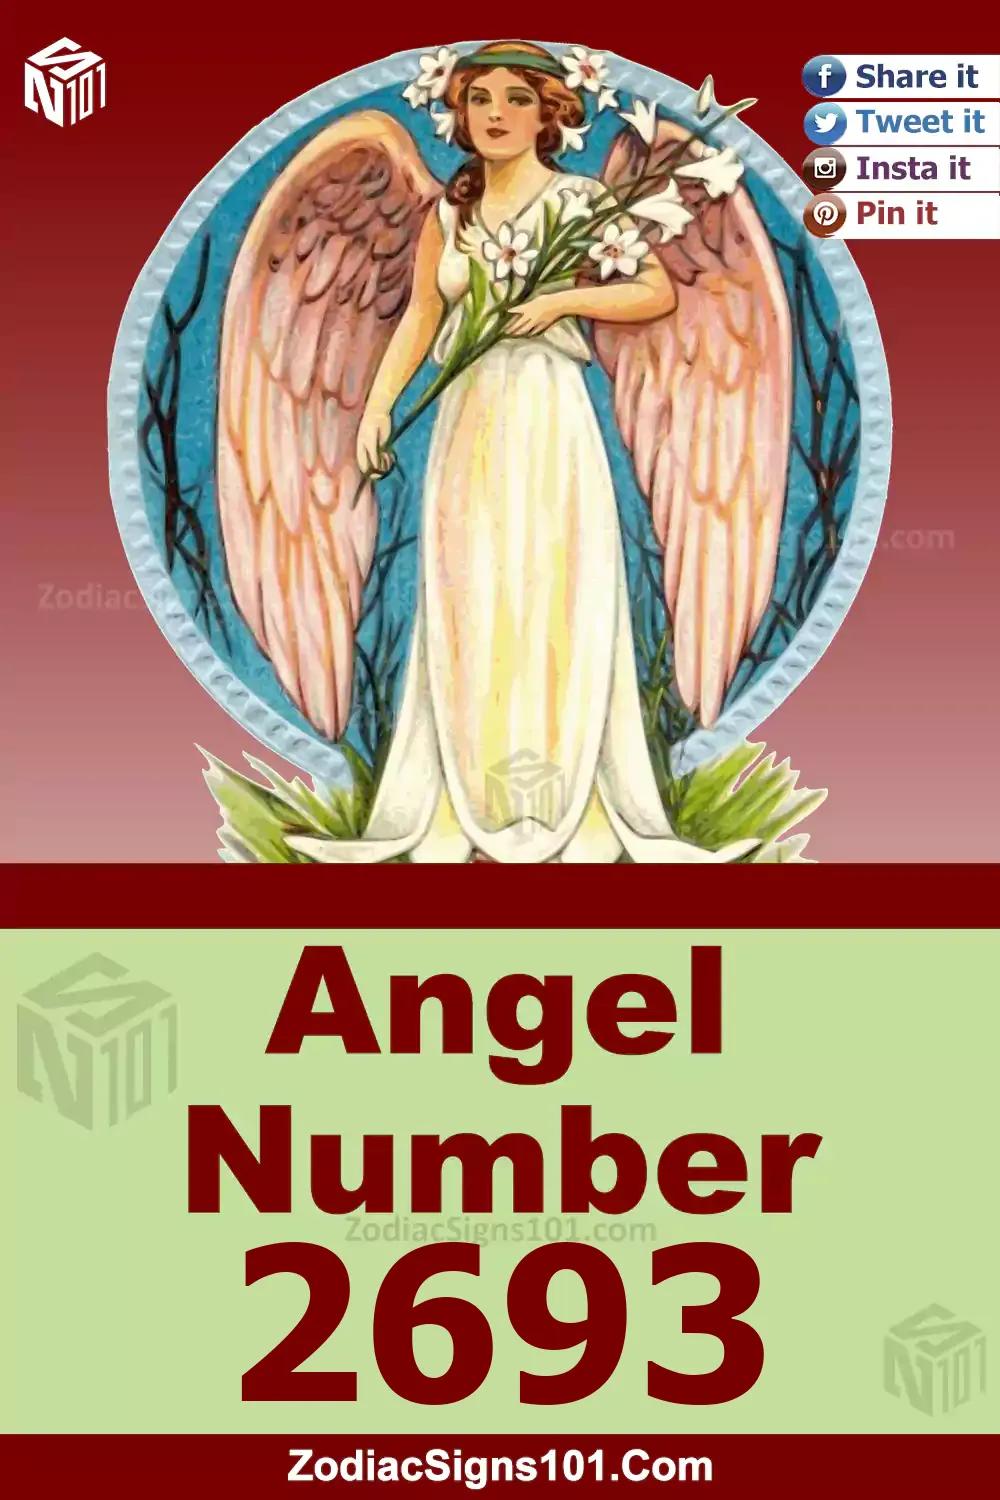 2693-Angel-Number-Meaning.jpg